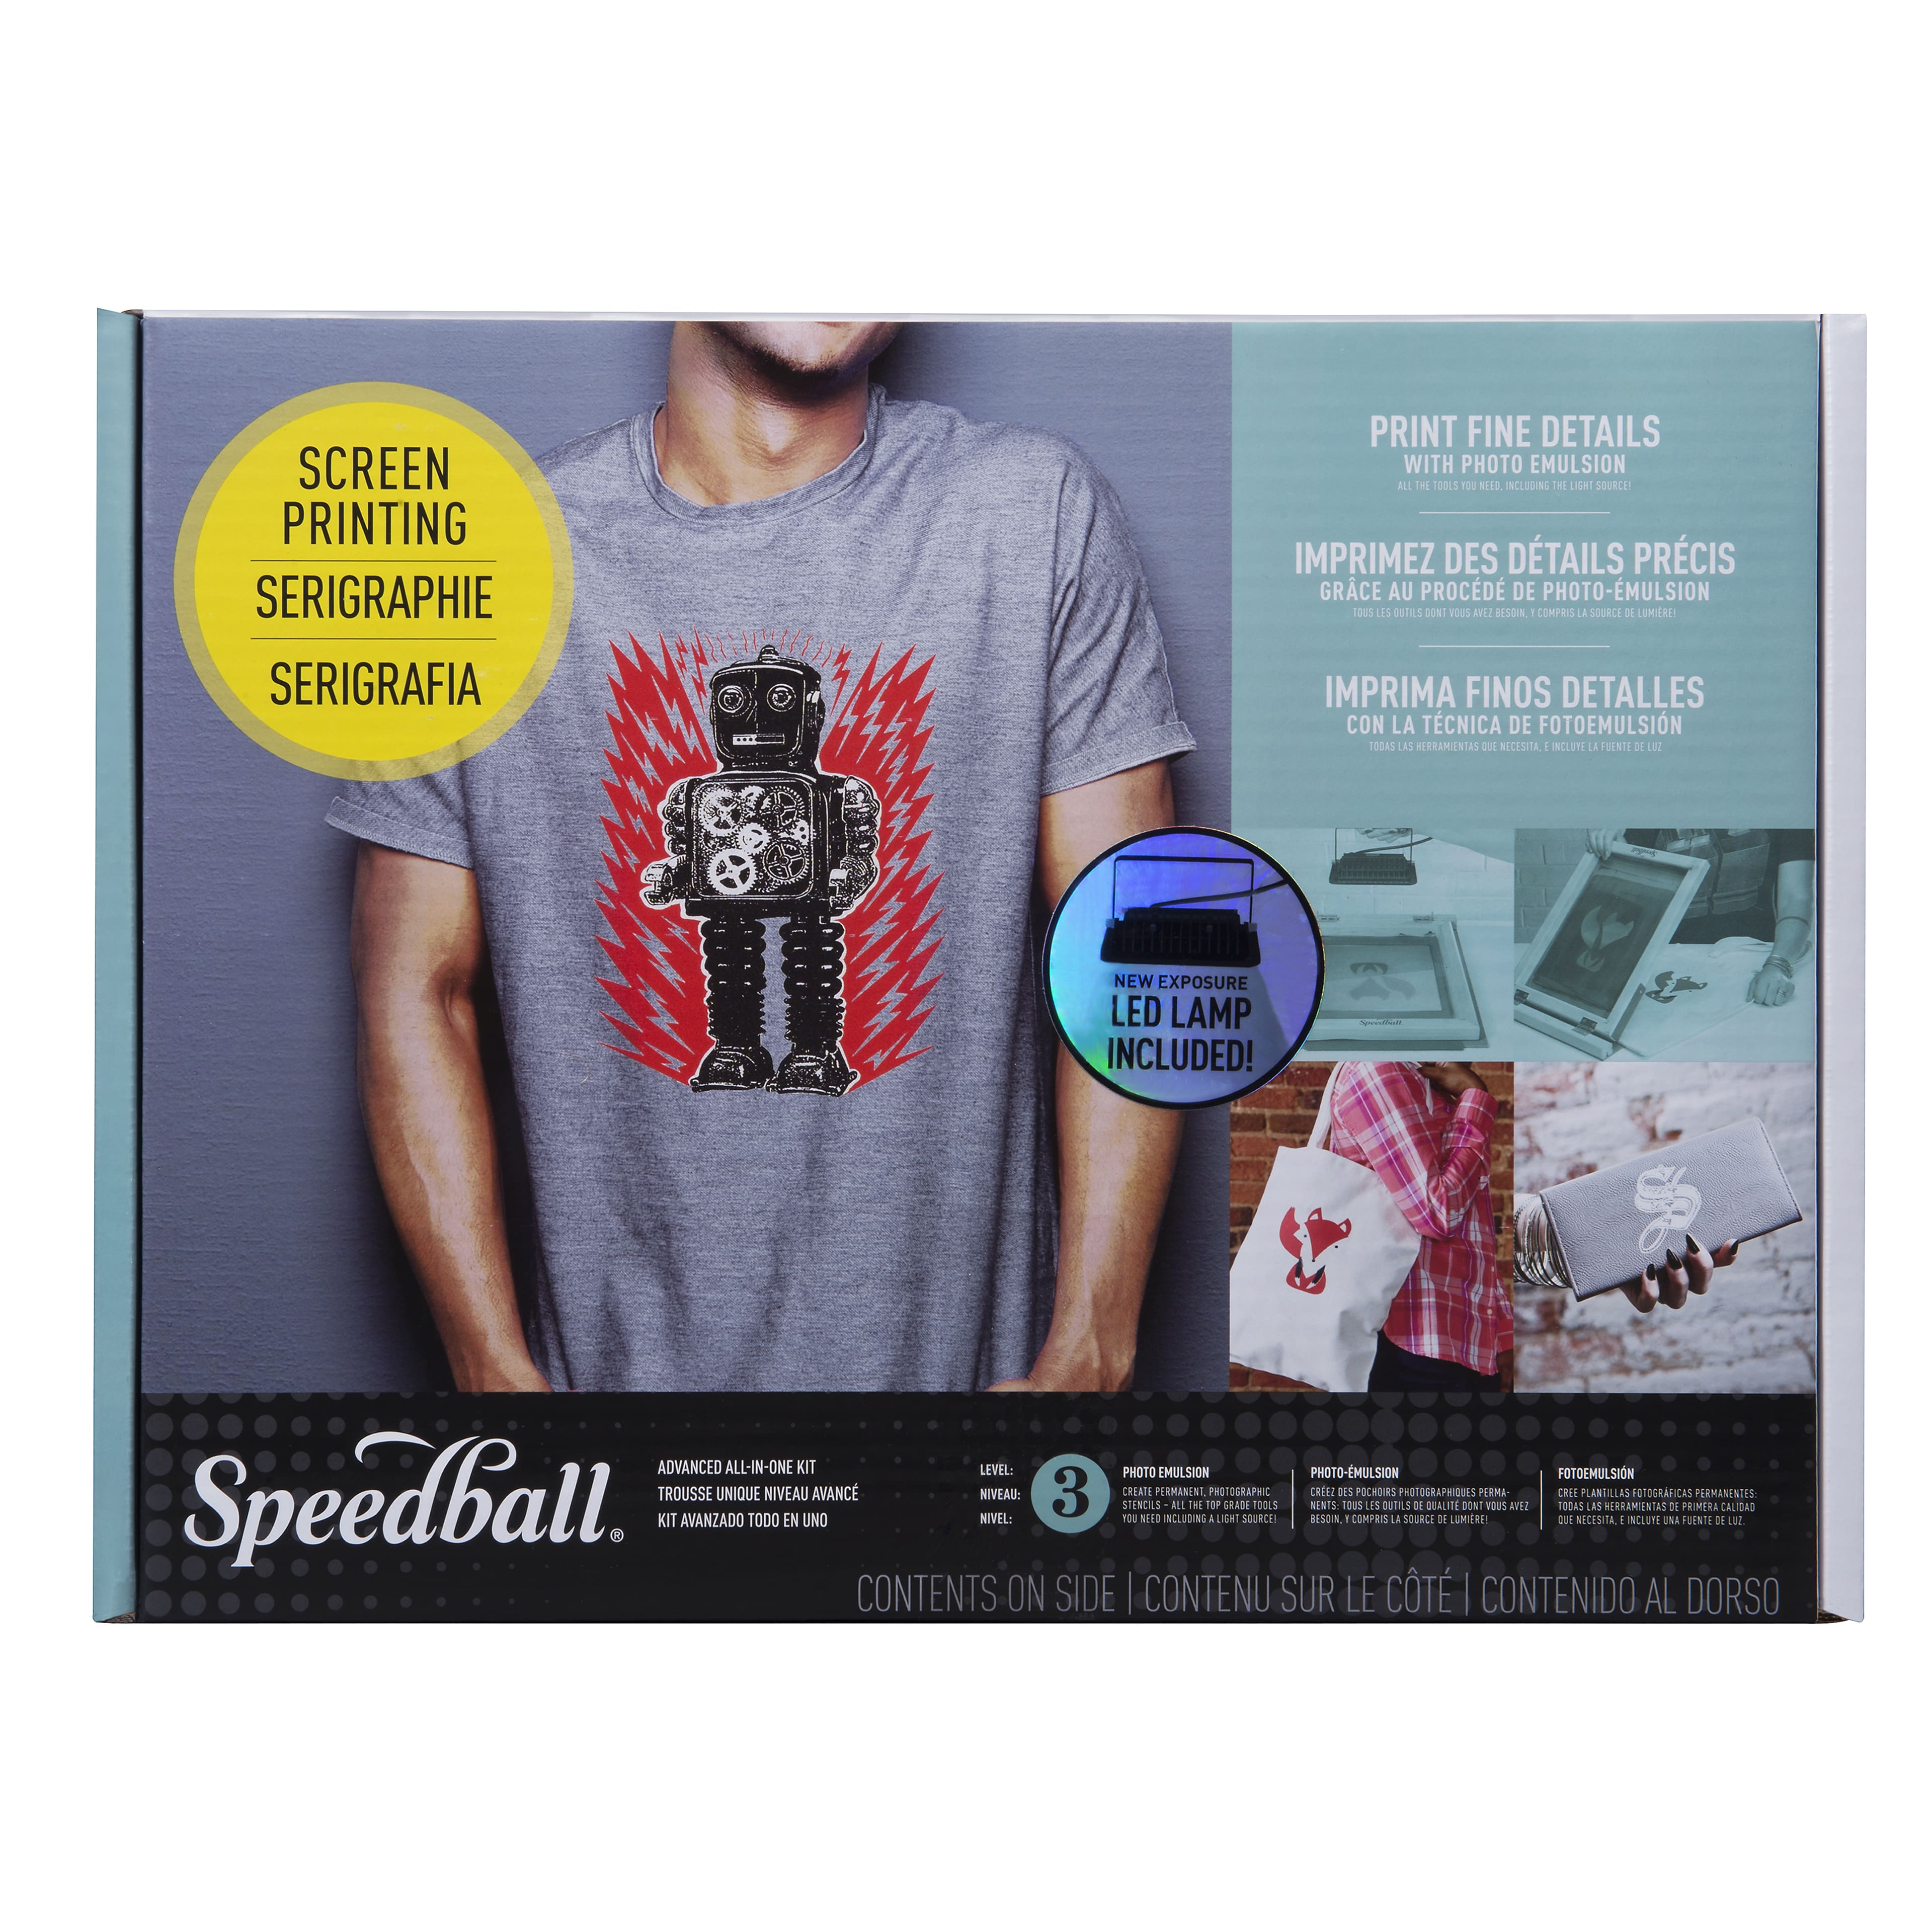 Speedball : Fluorescent Fabric Screen Printing Ink : 8oz : Hot